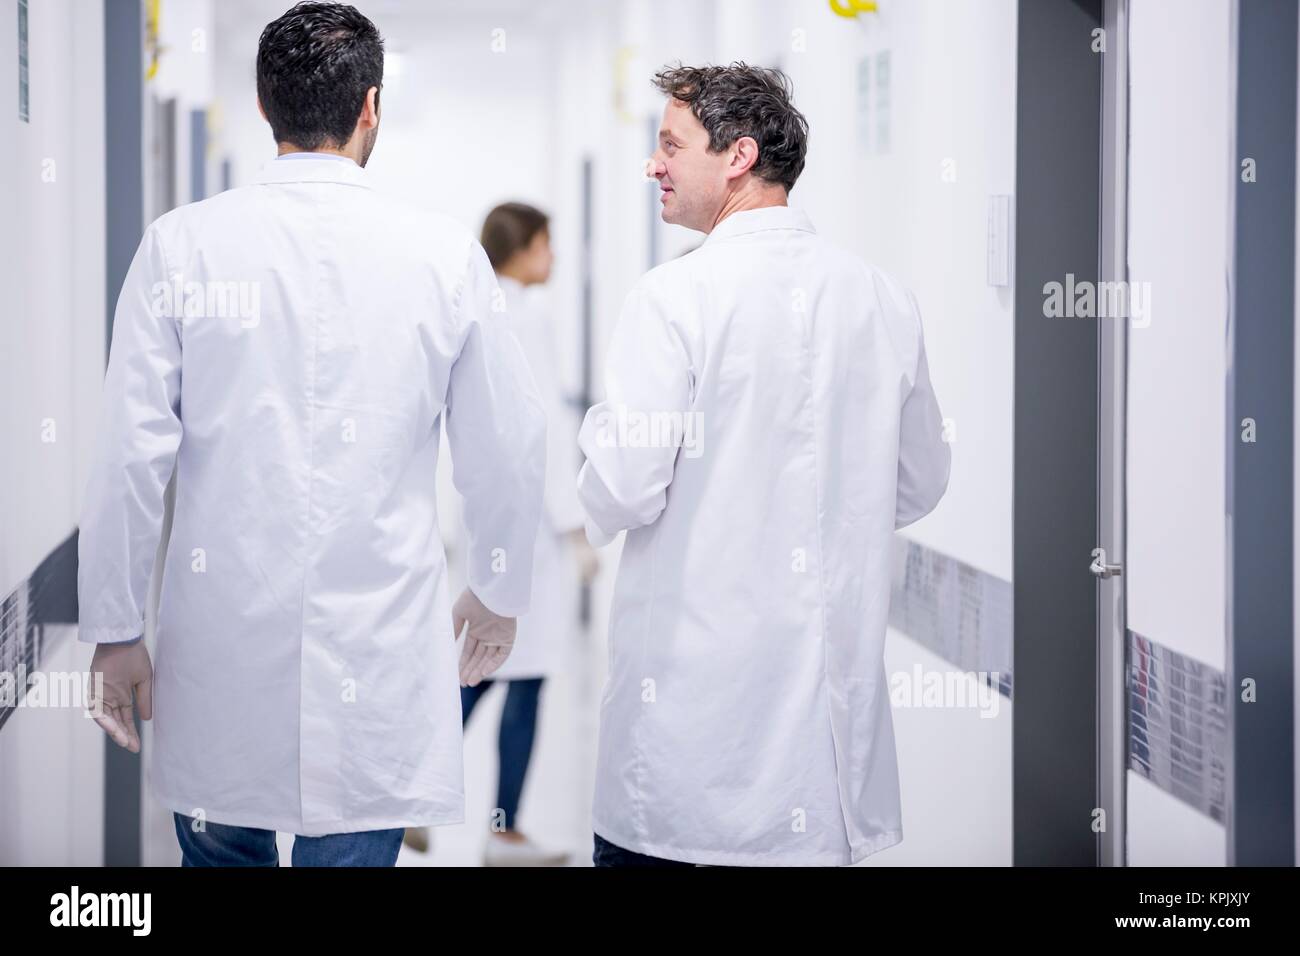 Male doctors walking down corridor. Stock Photo